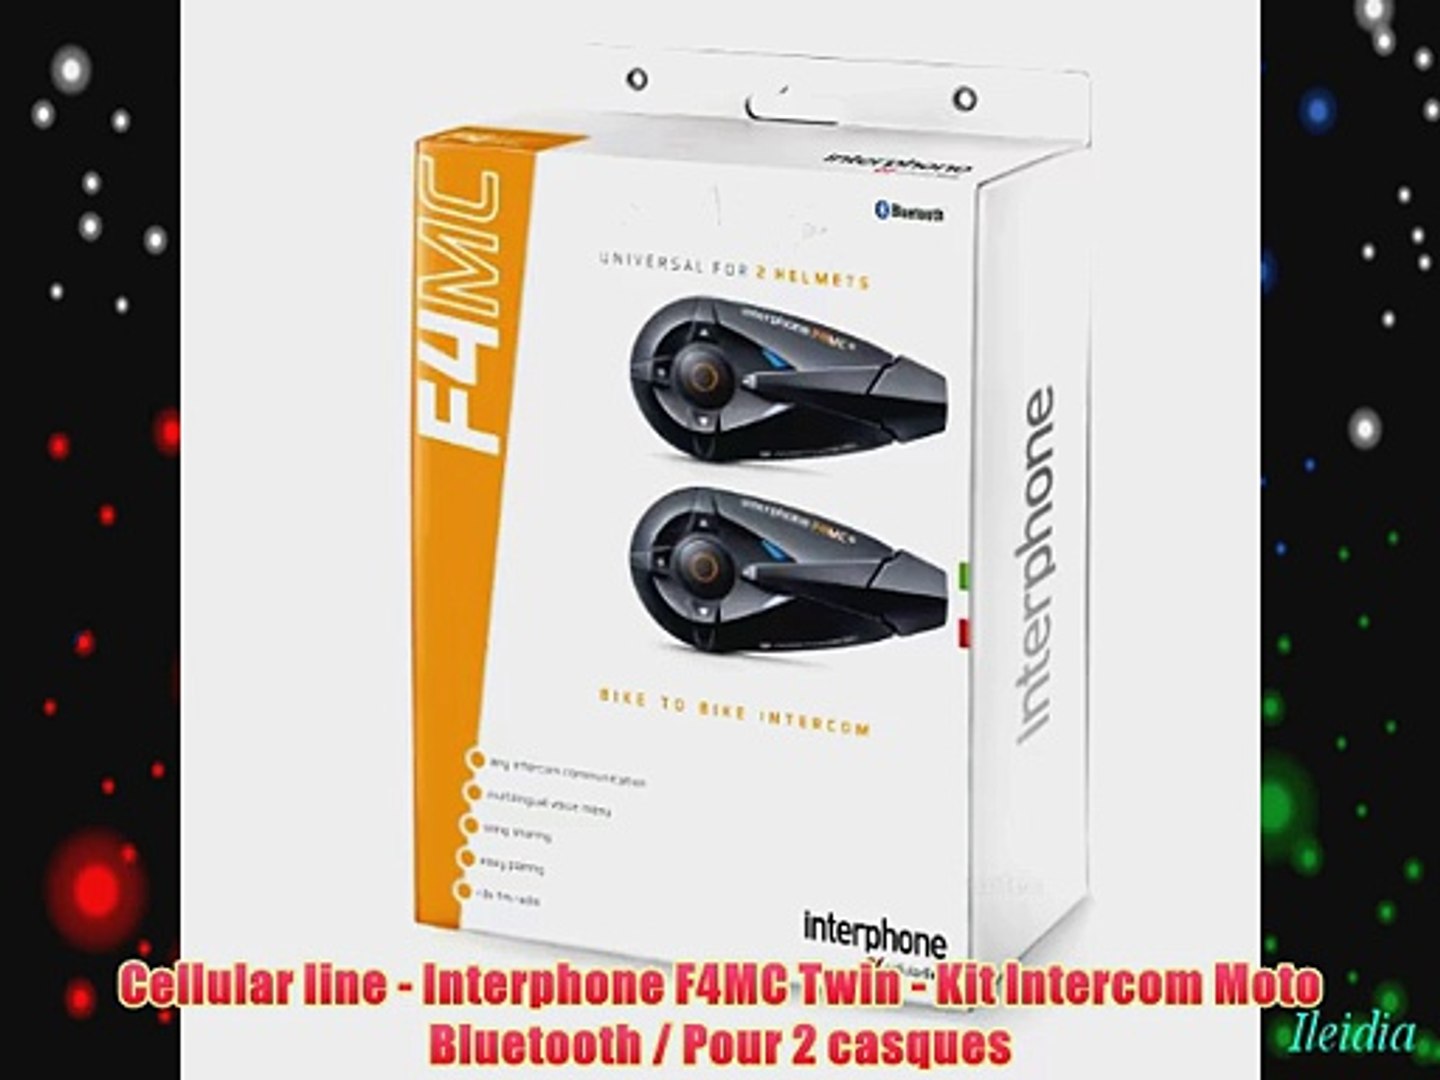 Cellular line - Interphone F4MC Twin - Kit Intercom Moto Bluetooth / Pour 2  casques - video Dailymotion